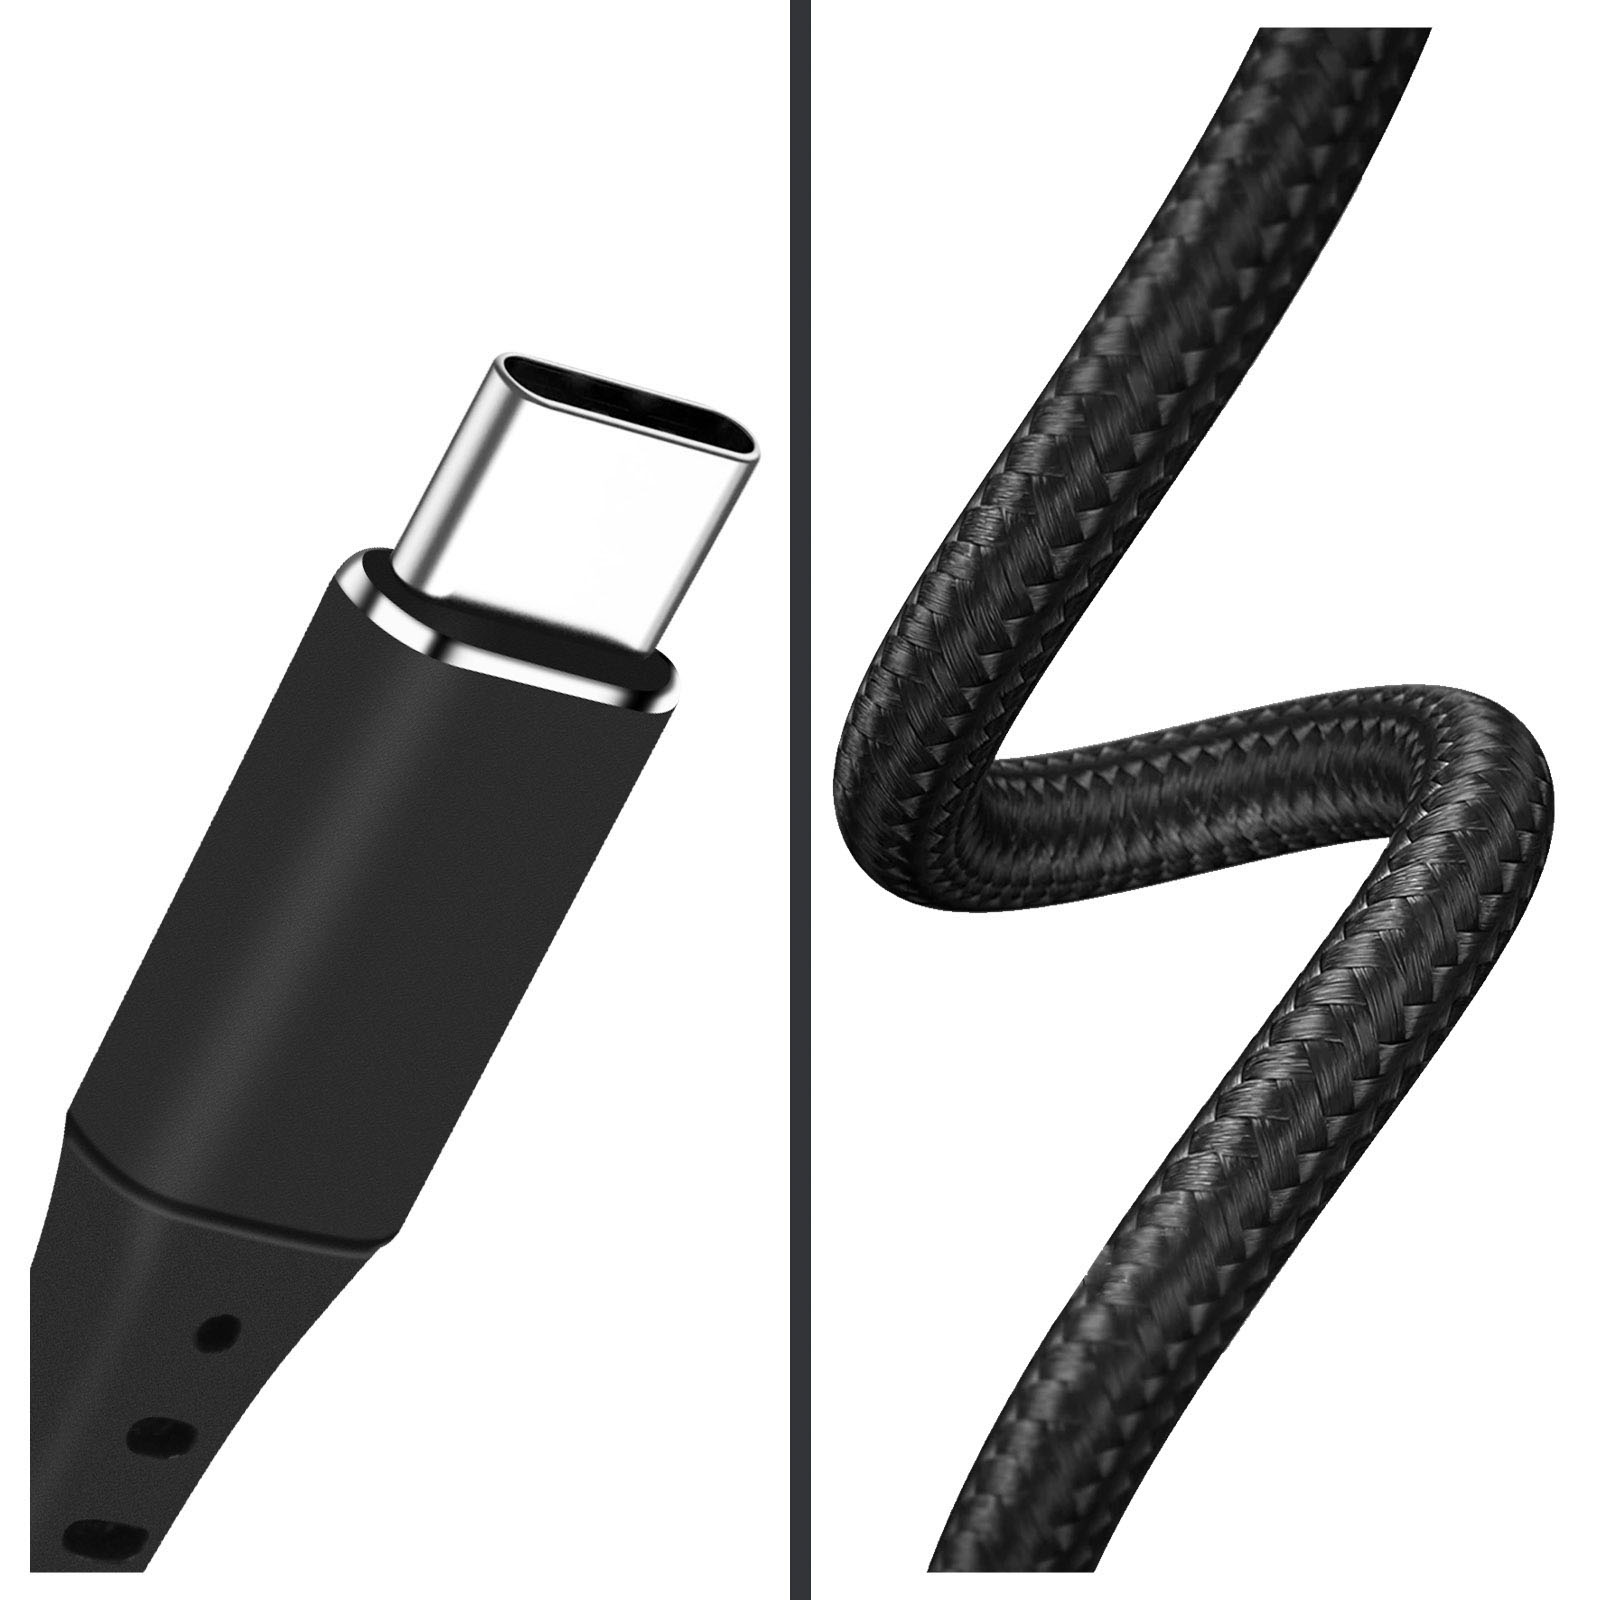 PDKAMPW-Câble USB Type-C pour recharge rapide, 5A, 2m, cordon de